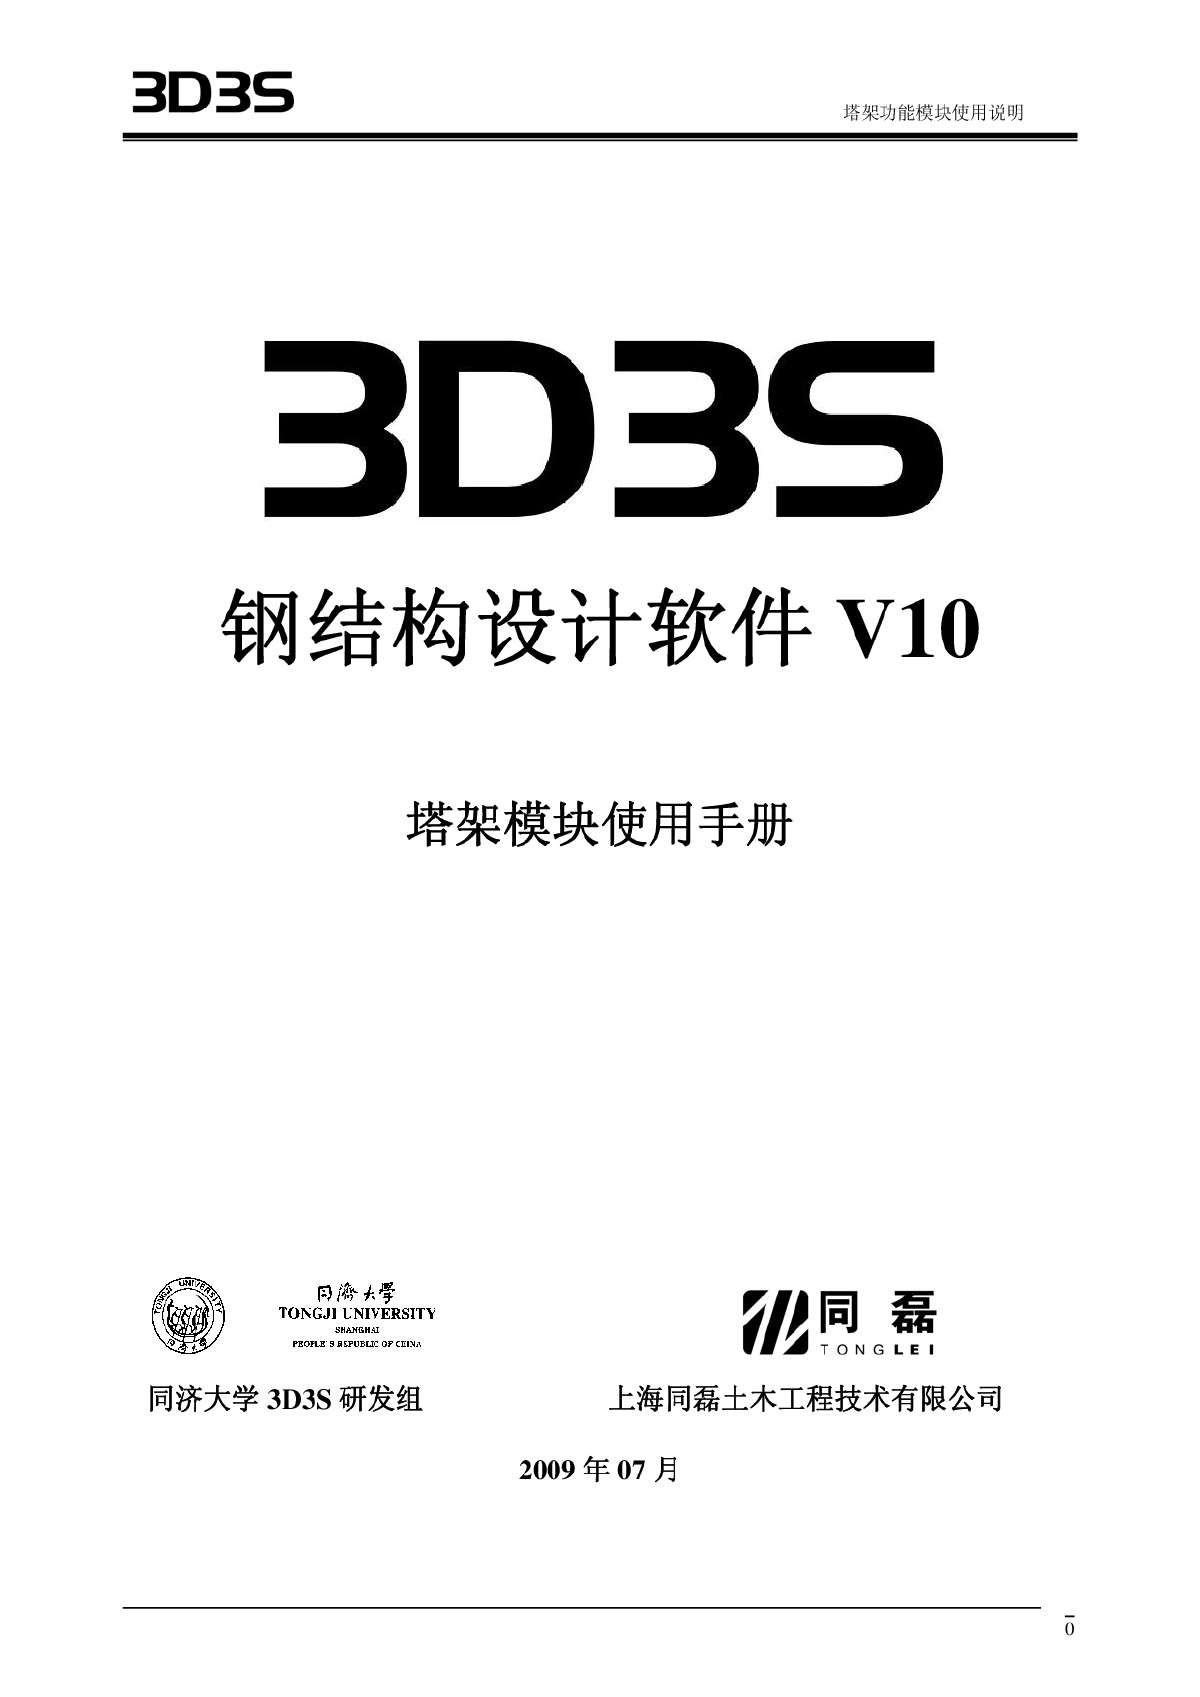 3D3S塔架模块使用手册